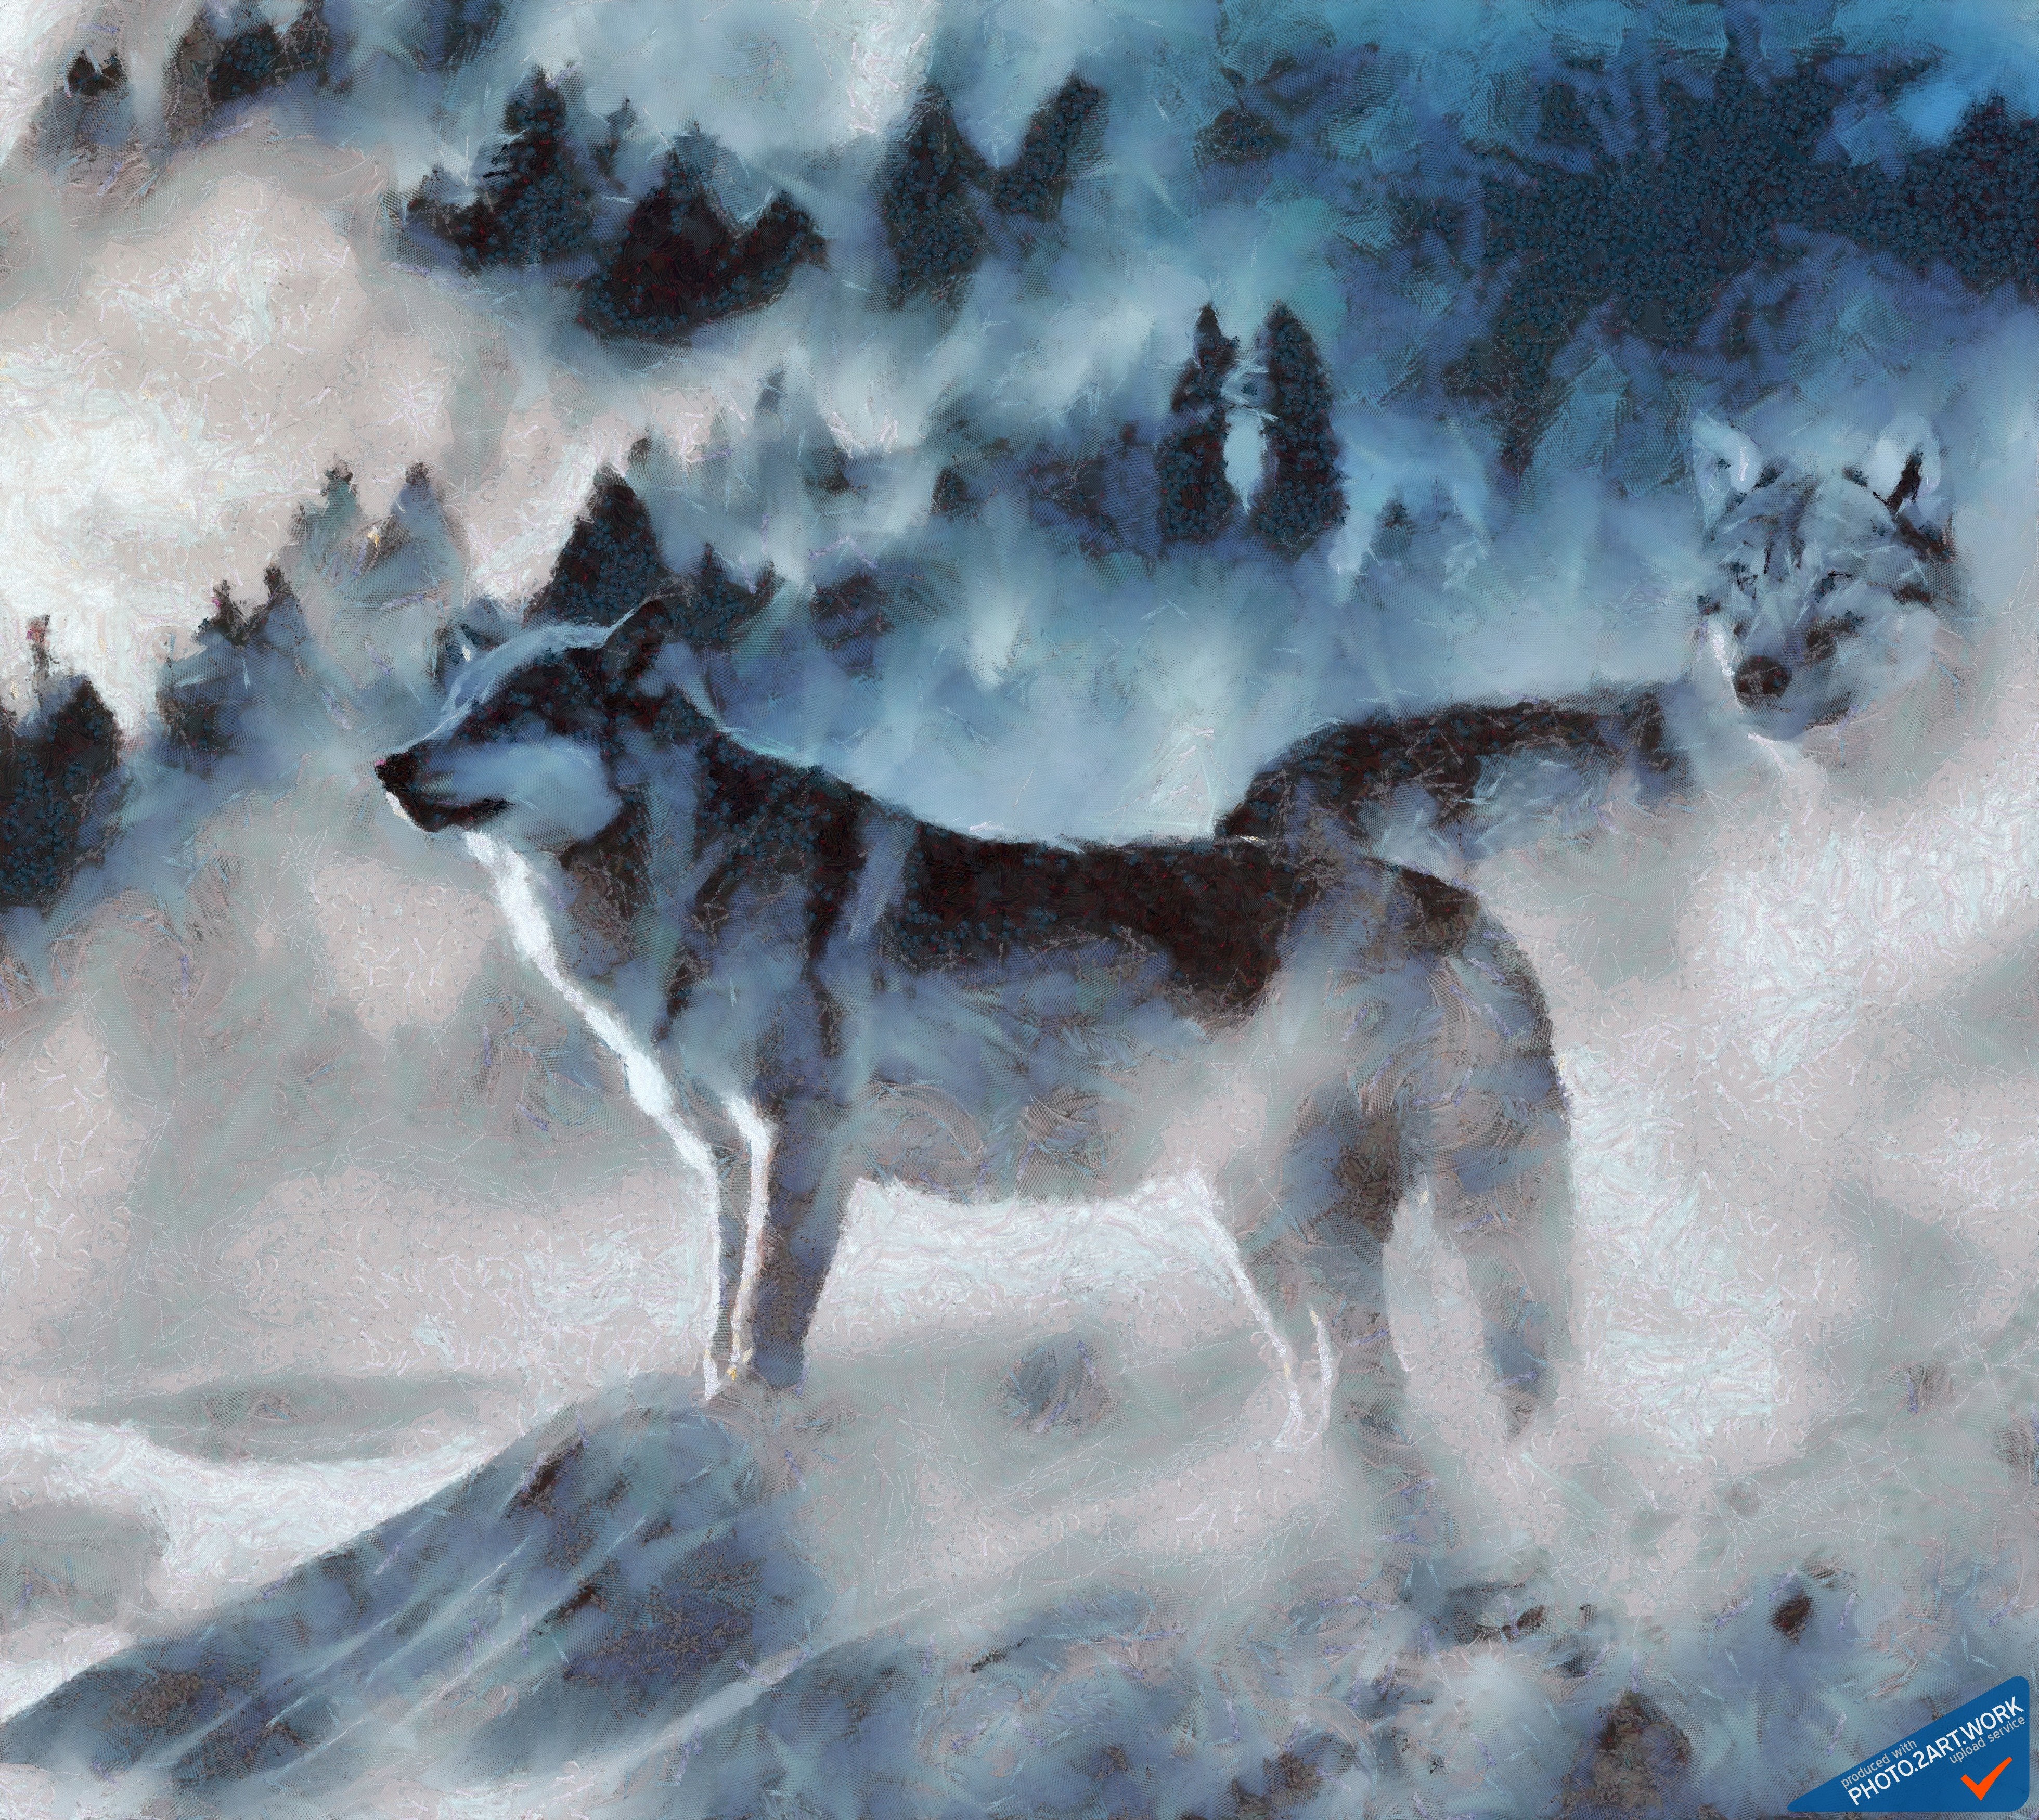 Wolf - ID: 16217-202742-9293, 2art.work, Surreal, Pack, Predator, HQ Photo